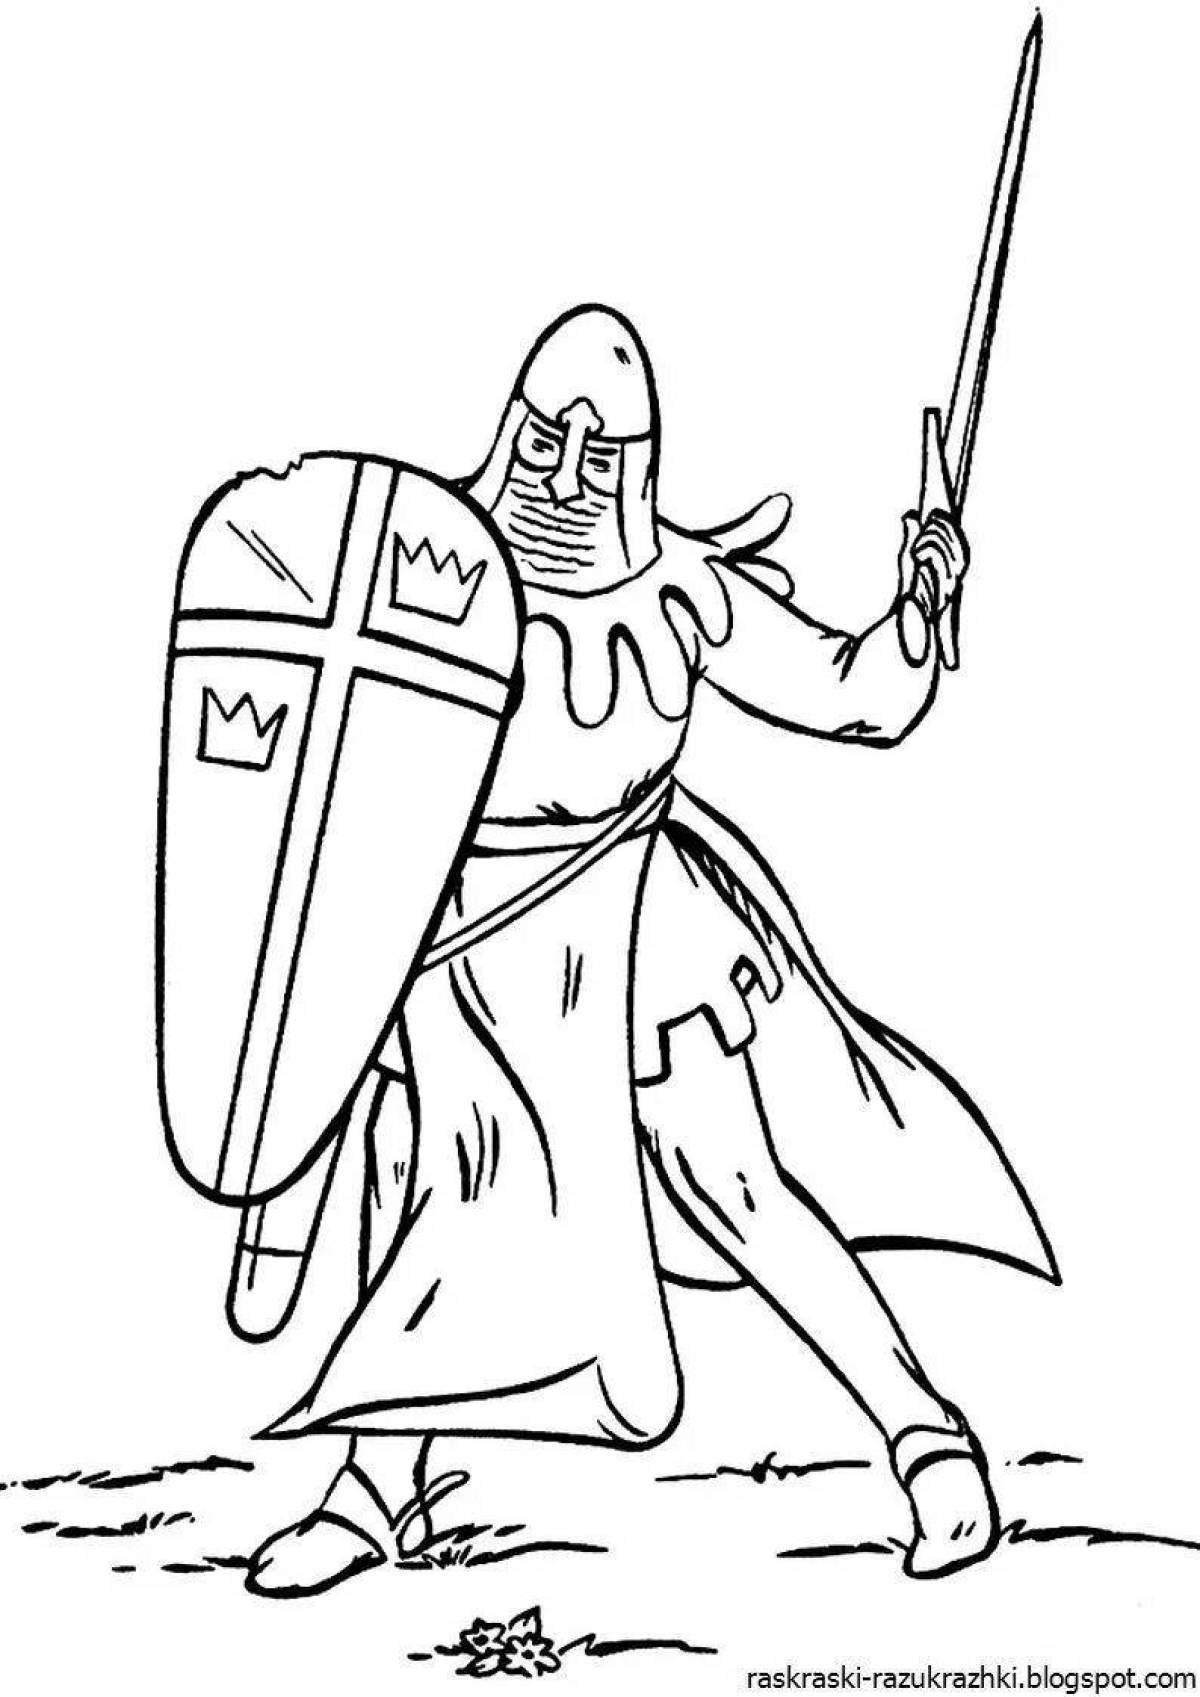 Иллюстрация раскраска рыцарь в доспехах